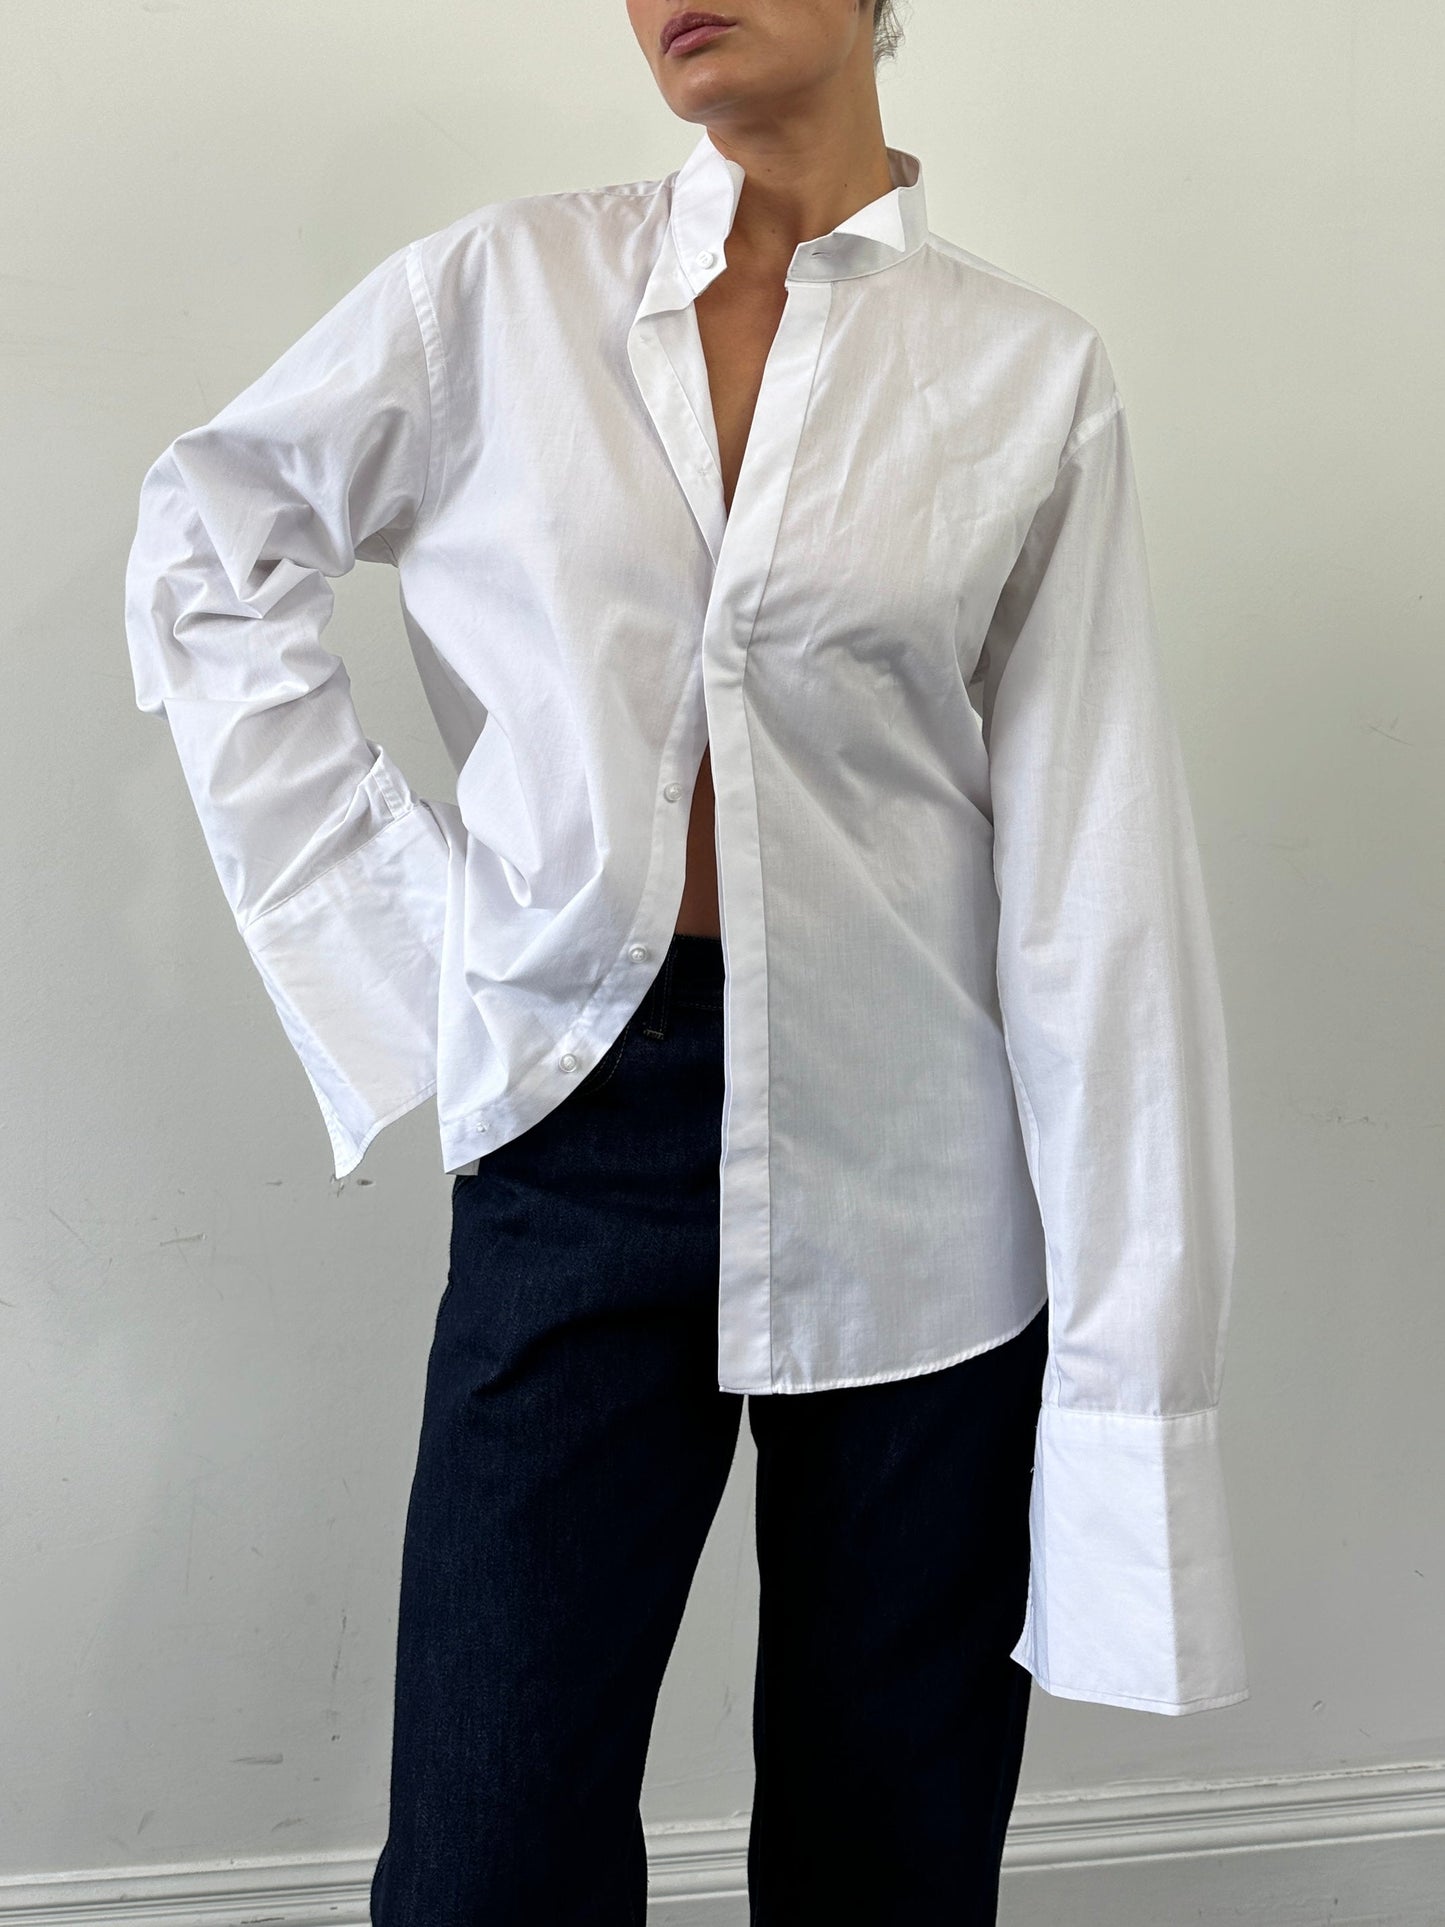 Vintage Cotton Wing Collar Dress Shirt - L/XL